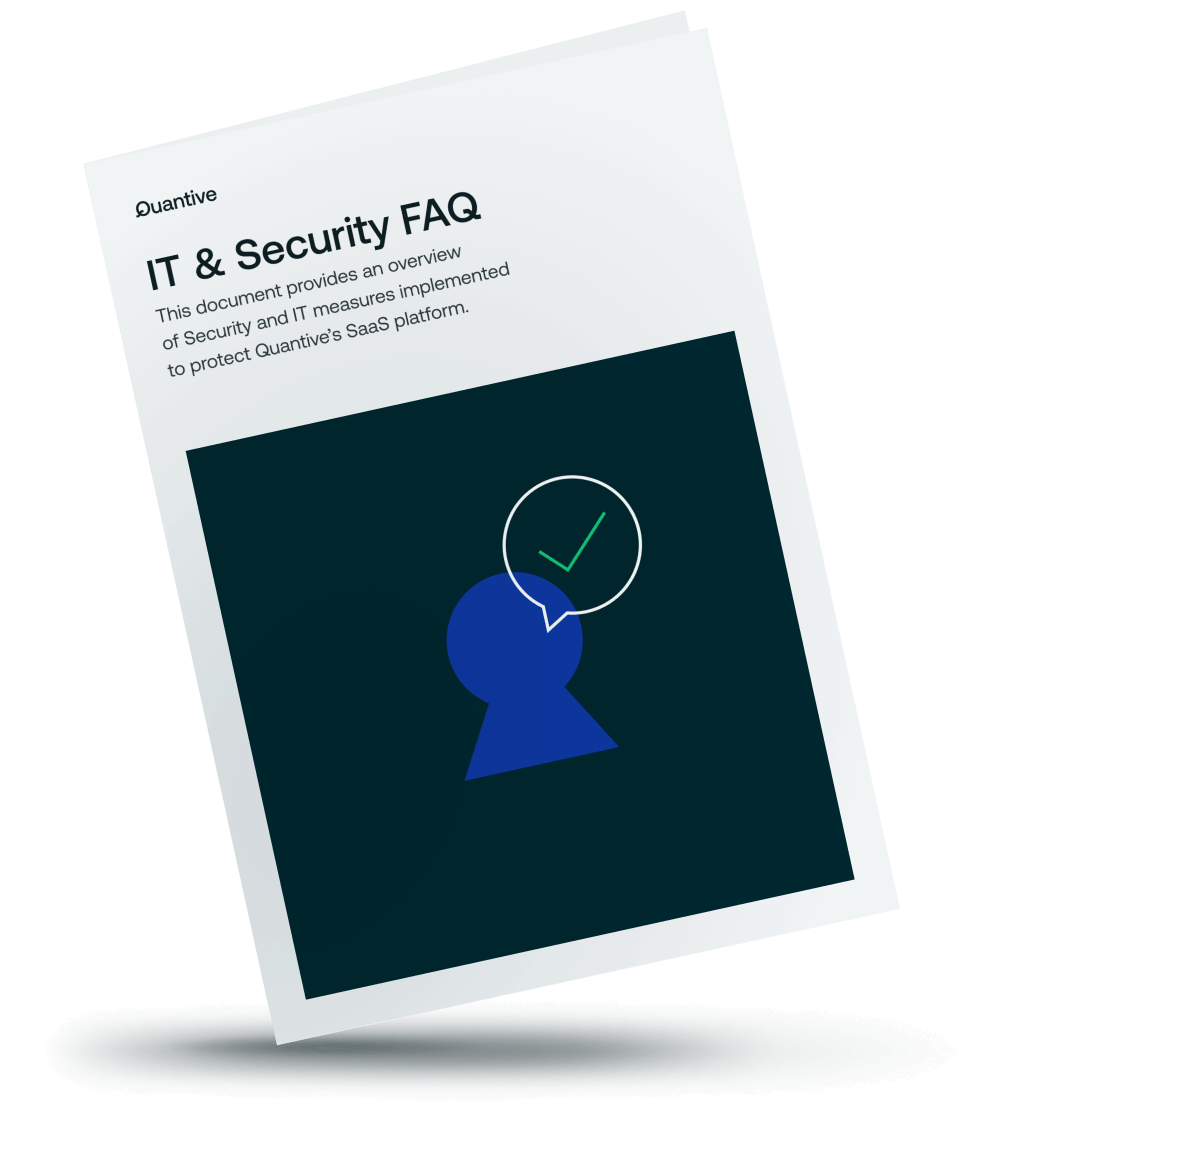 IT & Security FAQ doc